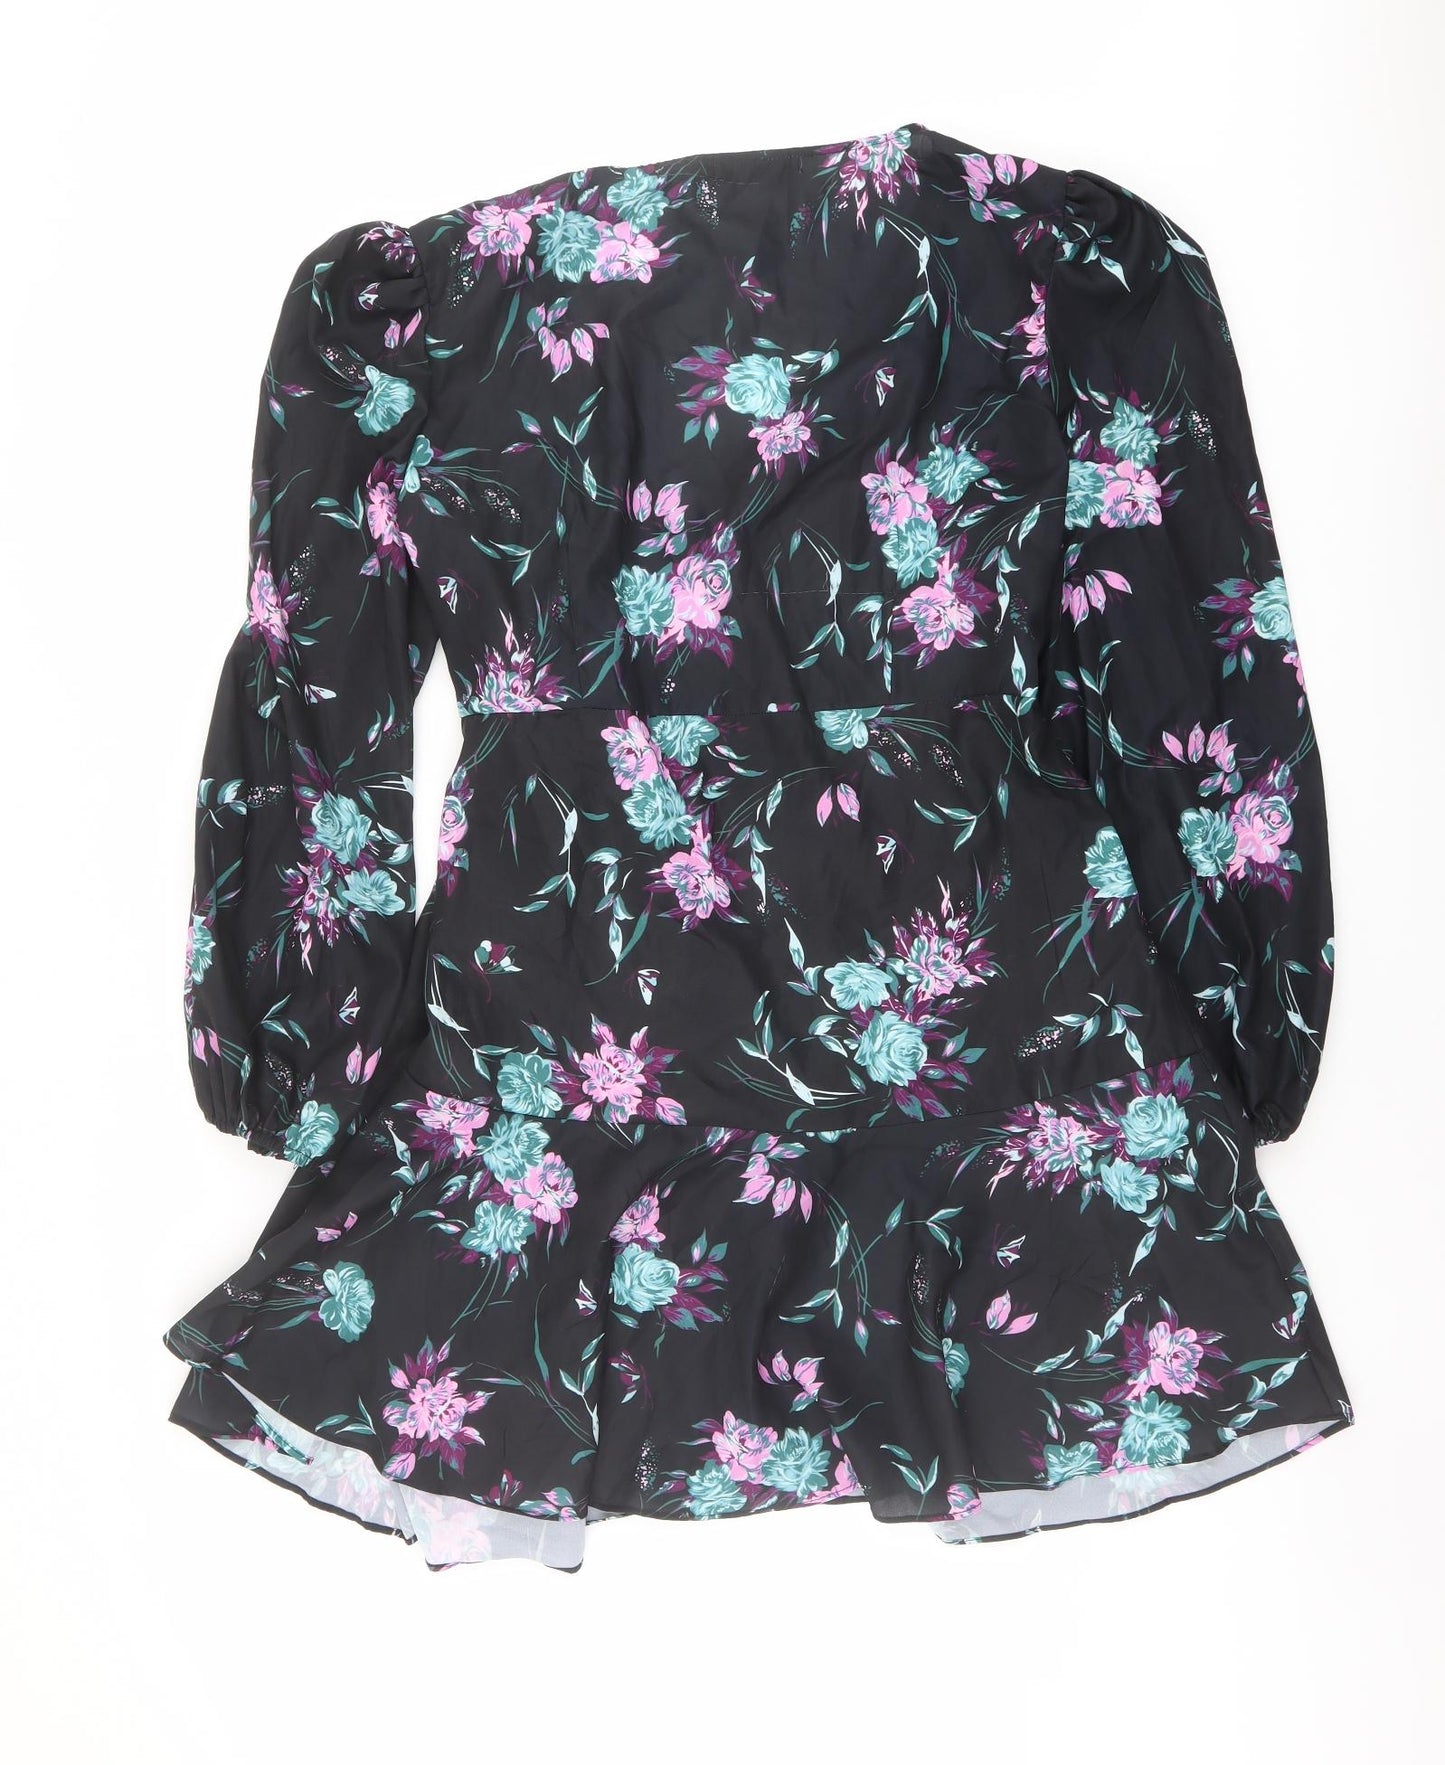 Oasis Womens Black Floral Polyester Wrap Dress Size 18 V-Neck Tie